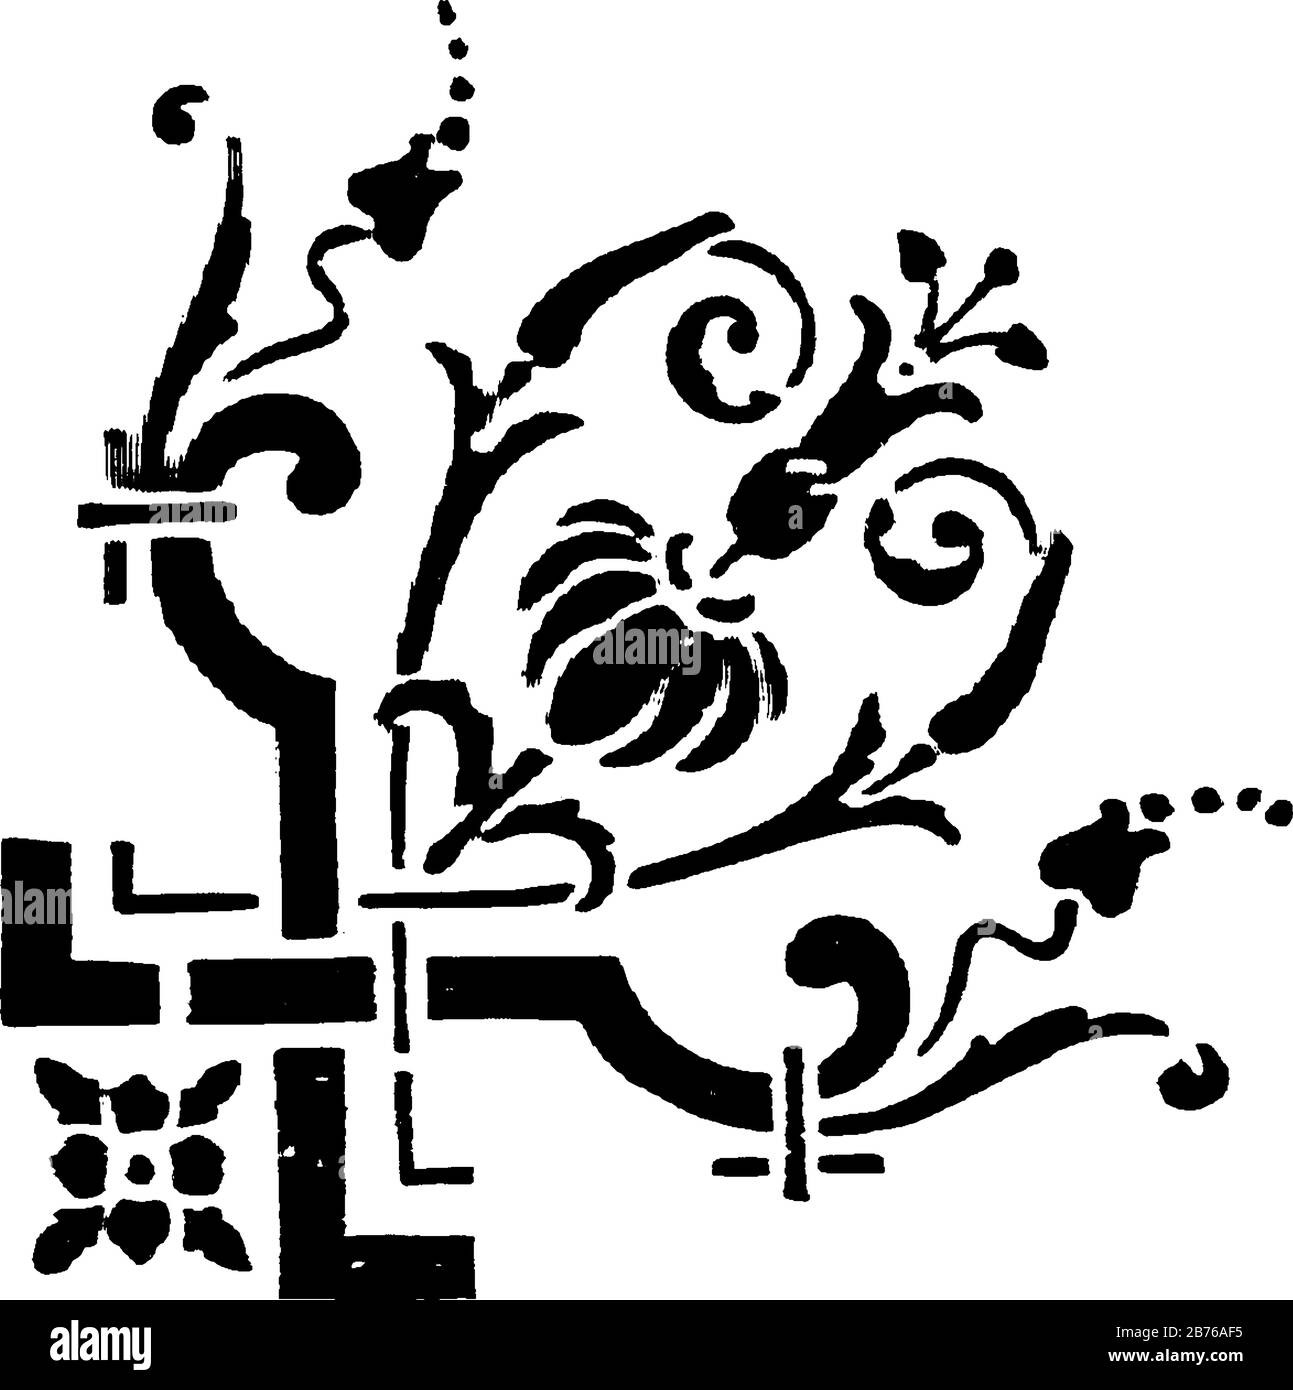 Stencils is a corner design vintage engraving Vector Image